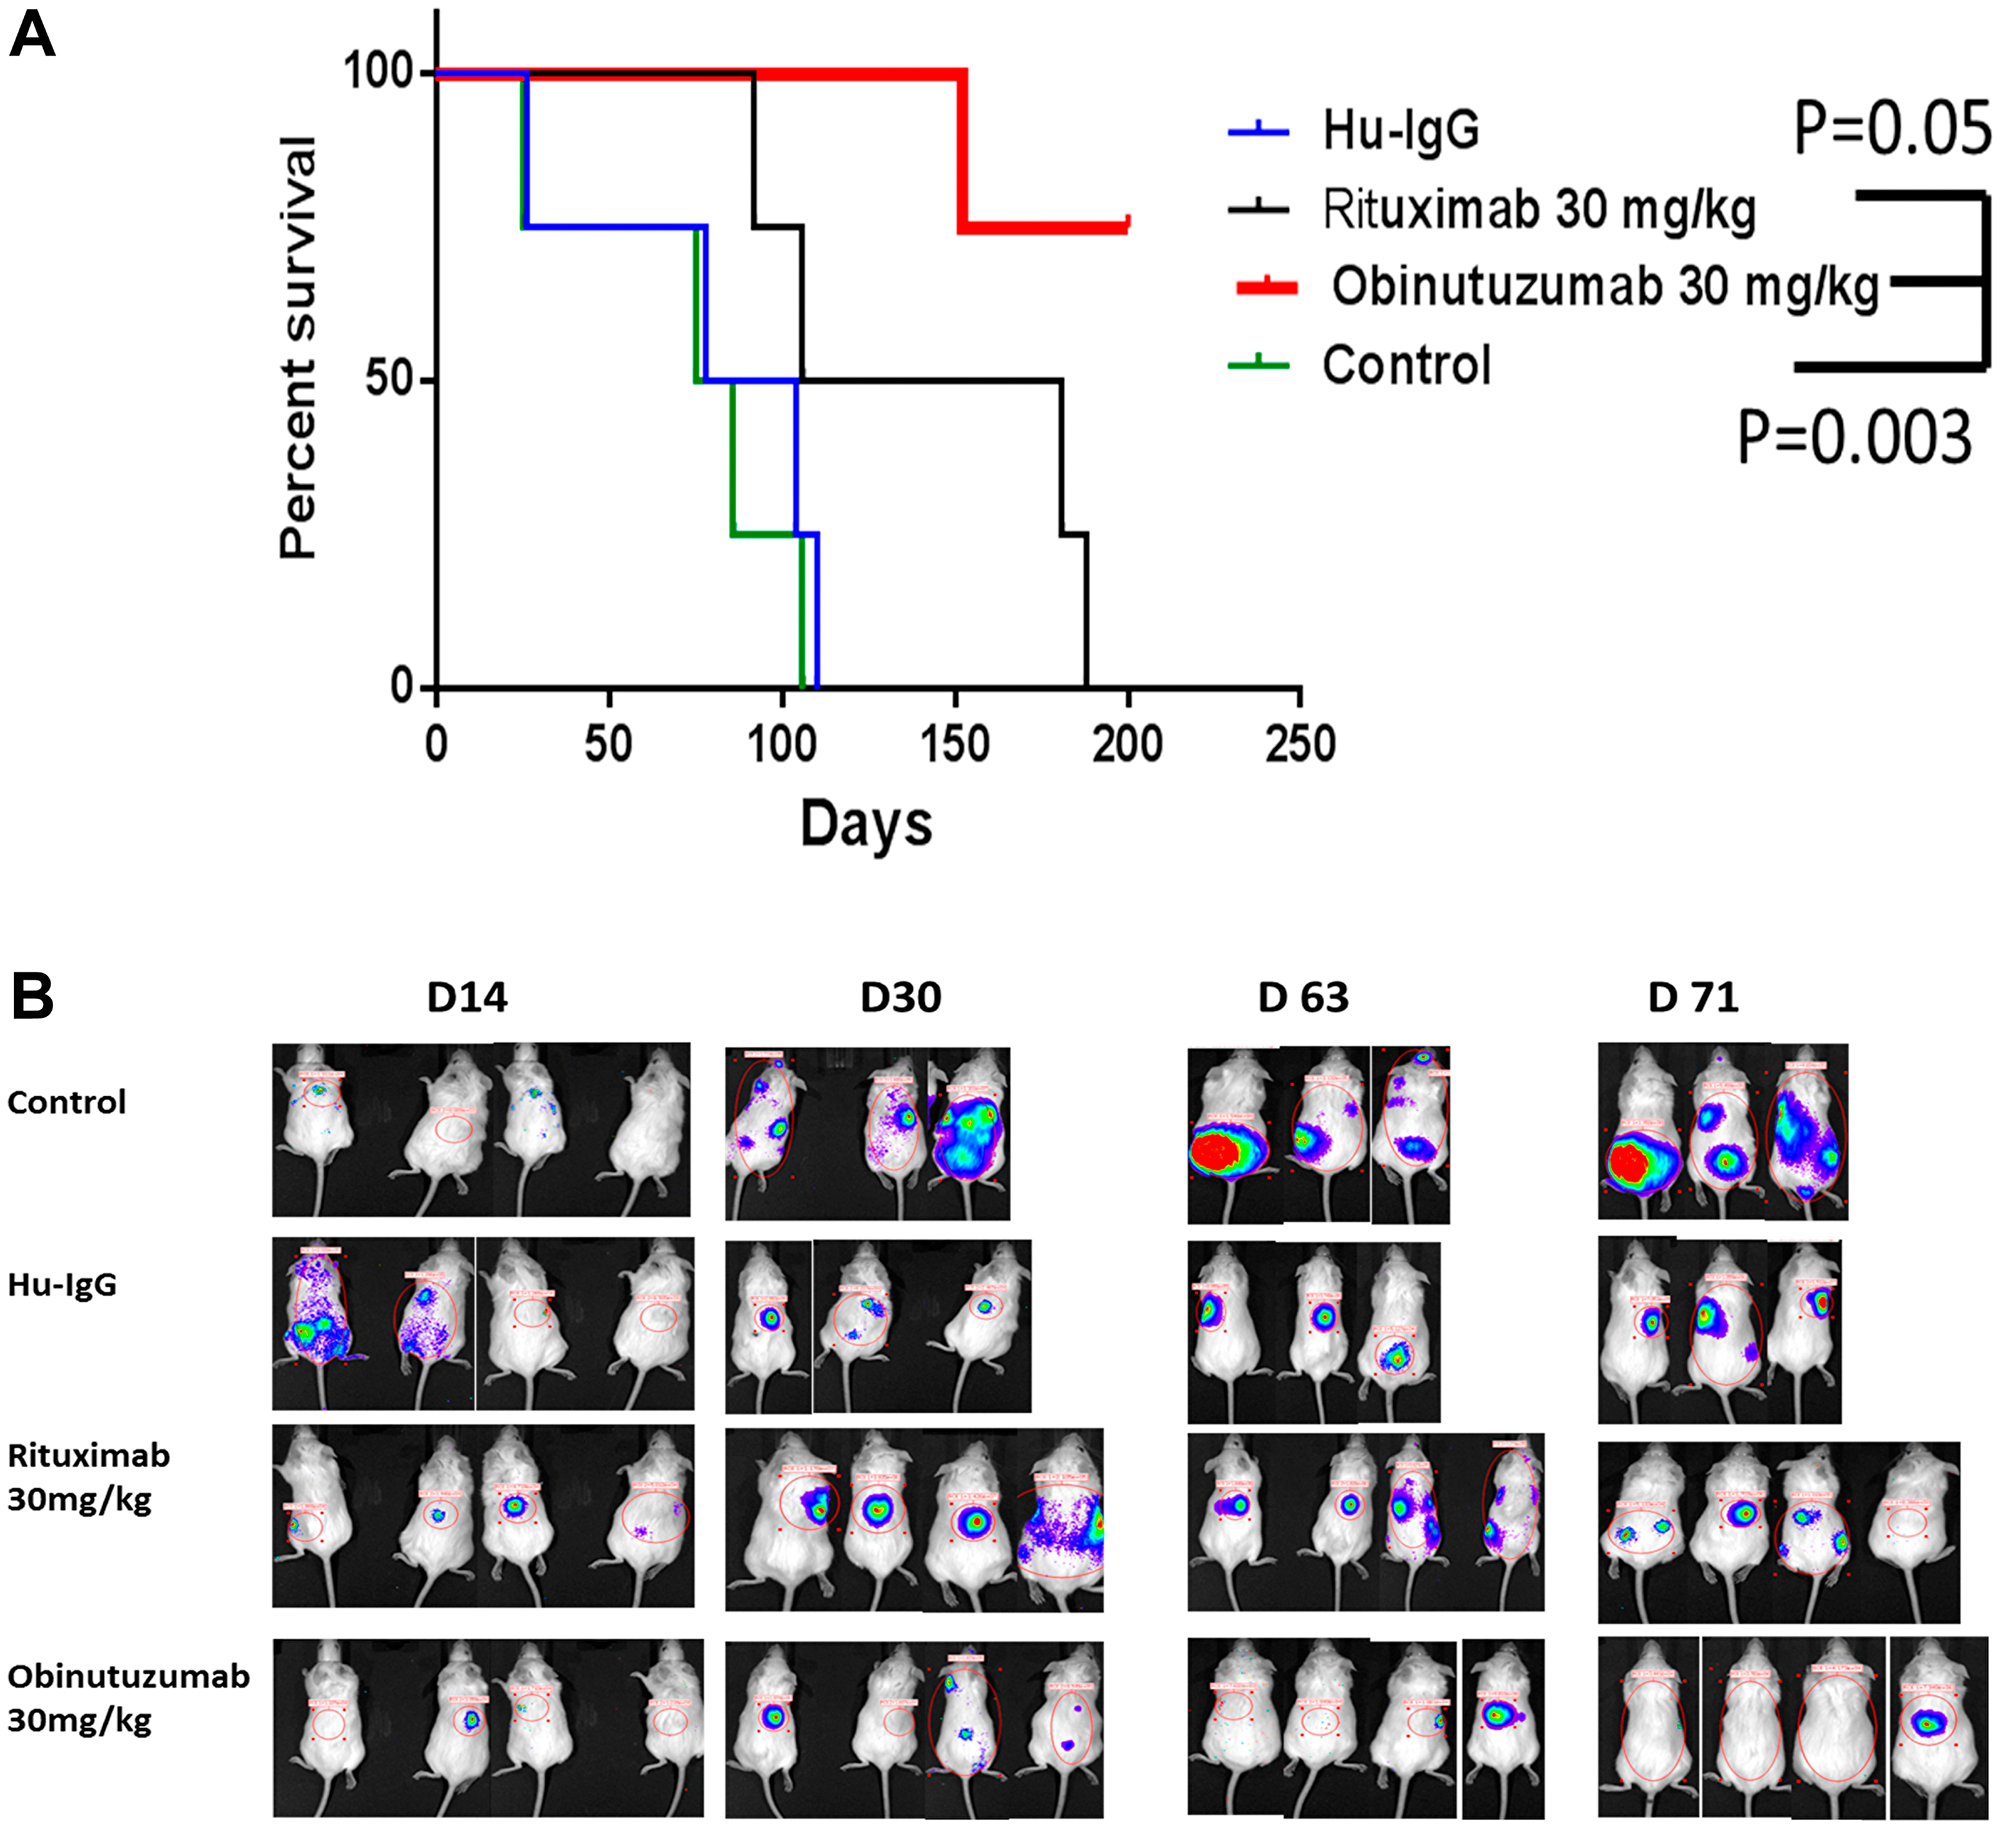 Effect of Obinutuzumab vs. Rituximab in PMBL NSG xenograft in-vivo.